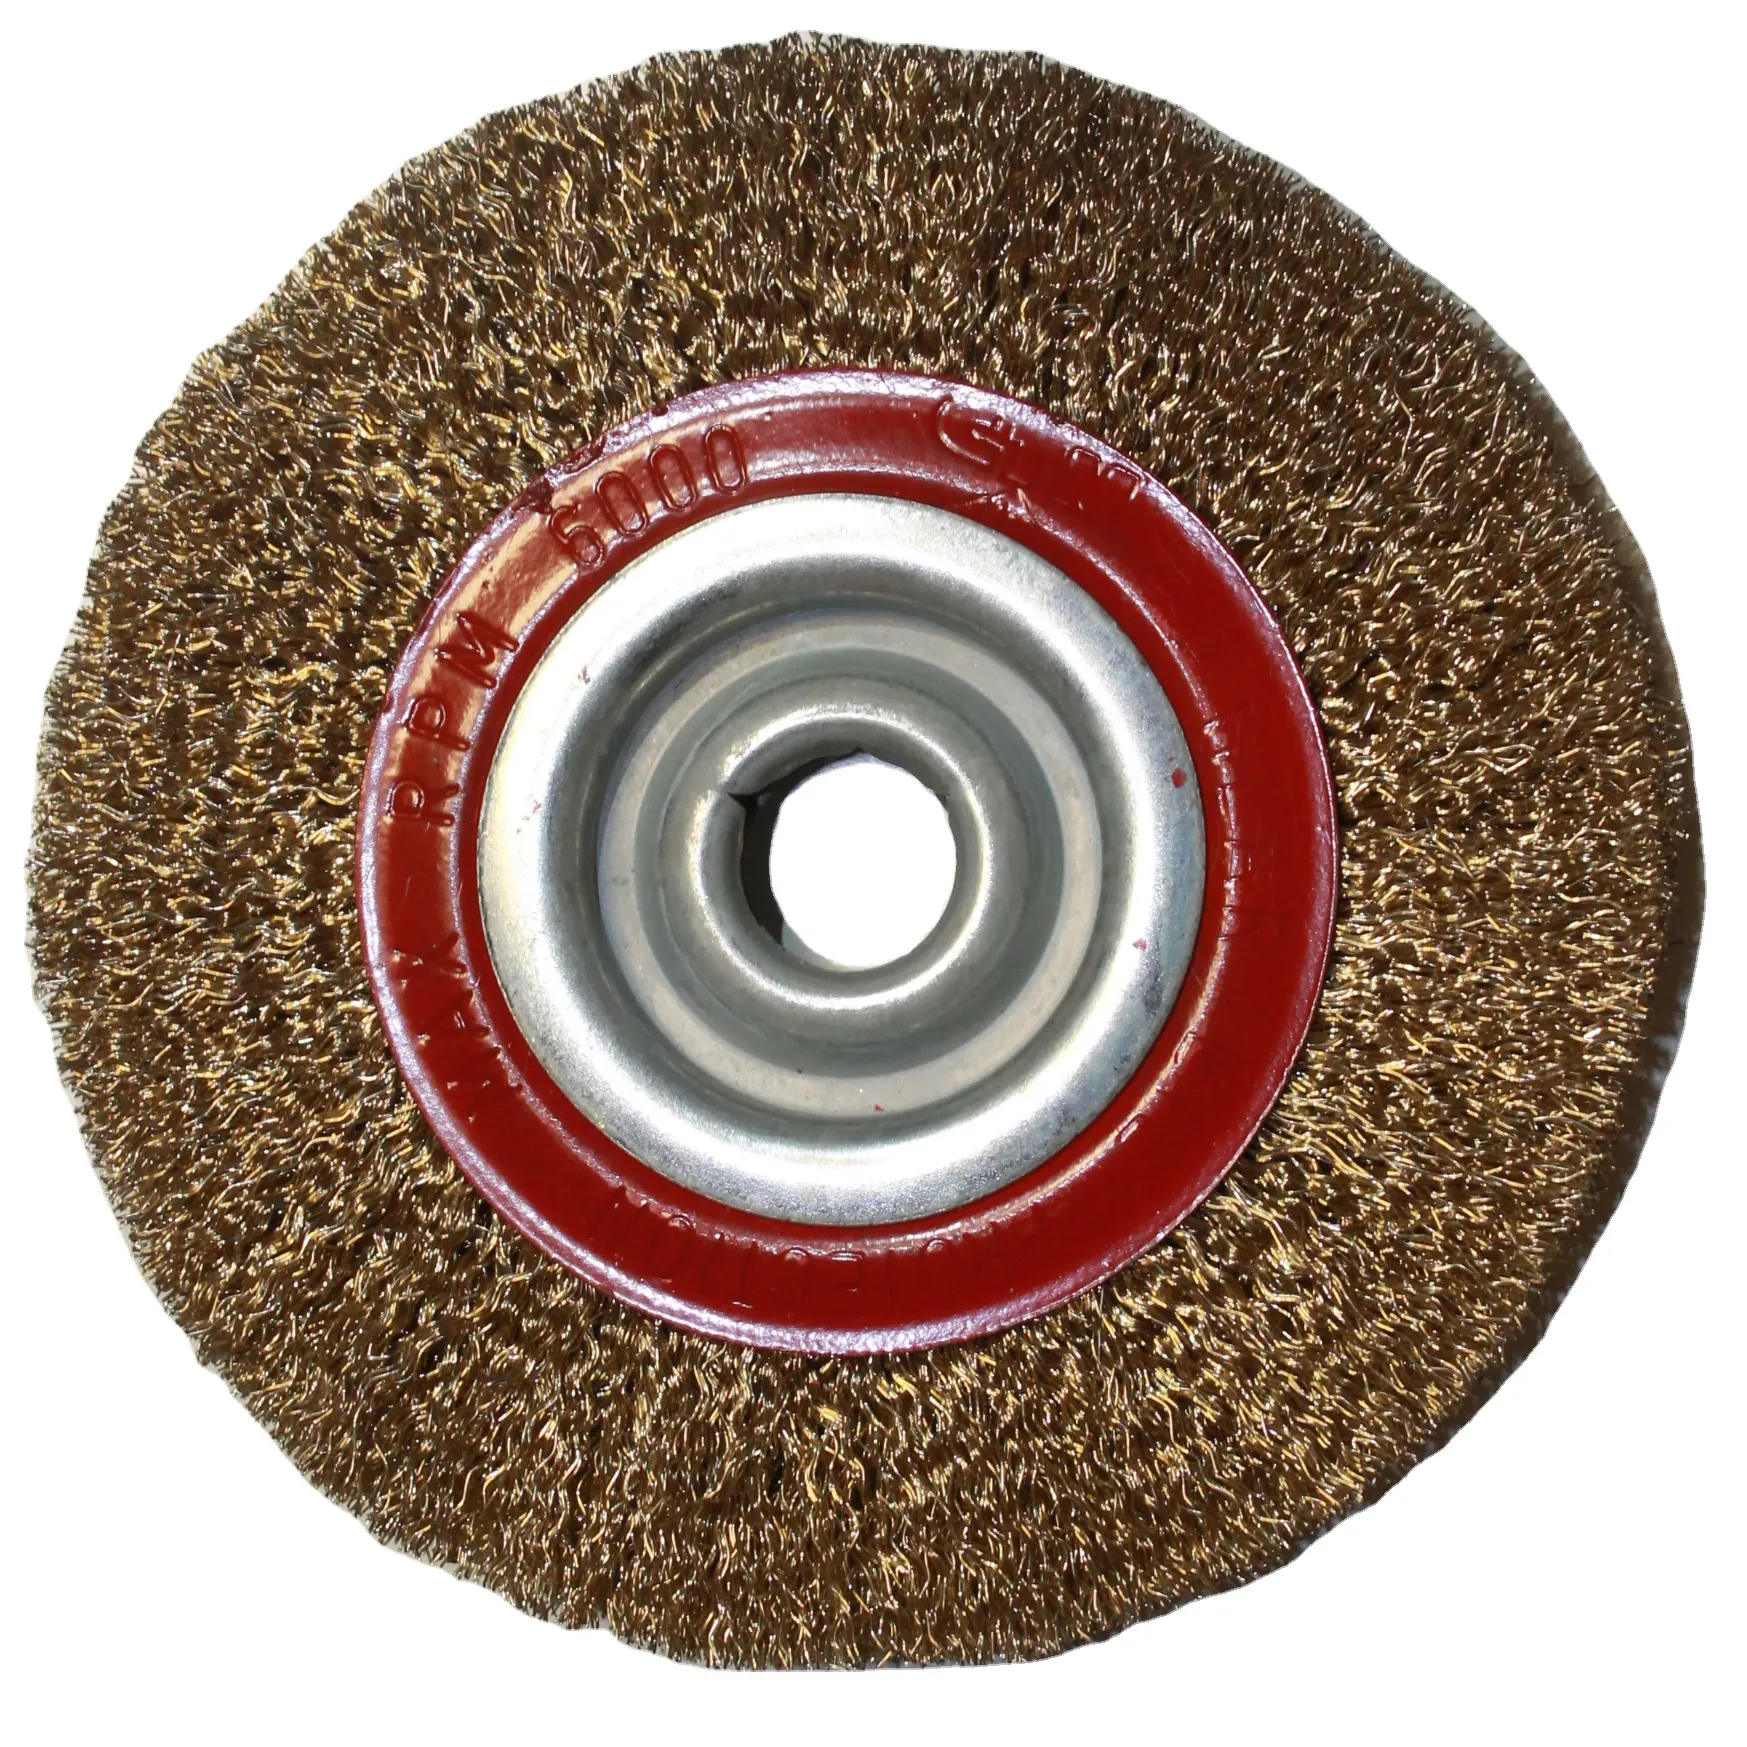 Cepillo de alambre Circular de latón prensado, rueda de desbarbado abrasivo rotativo, amoladora angular de acero inoxidable, 300mm (0,15-0,20)